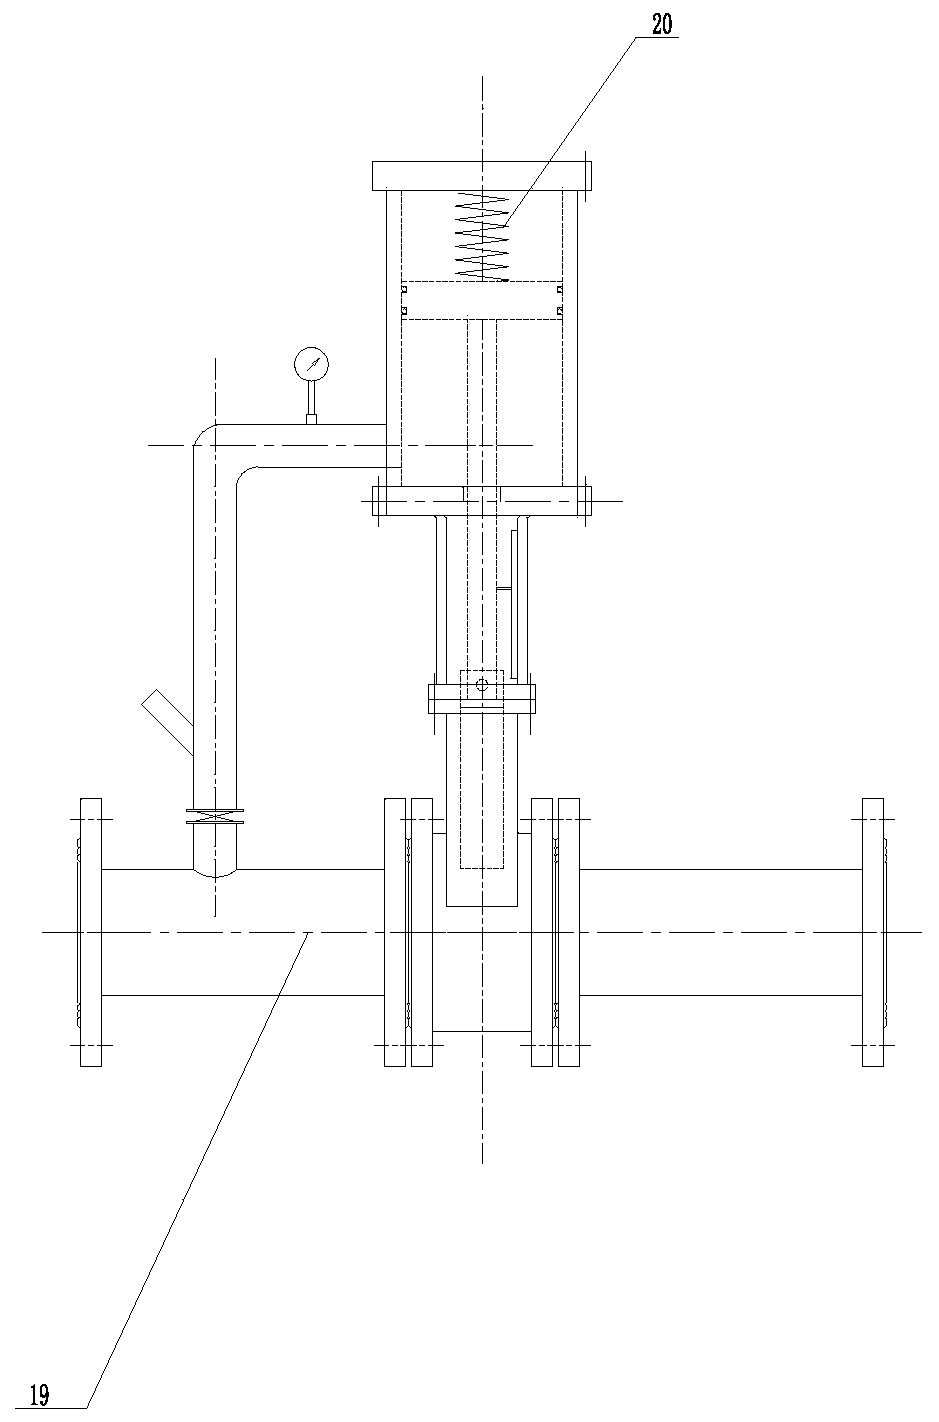 Novel pressure-superposed pressurized water supply equipment